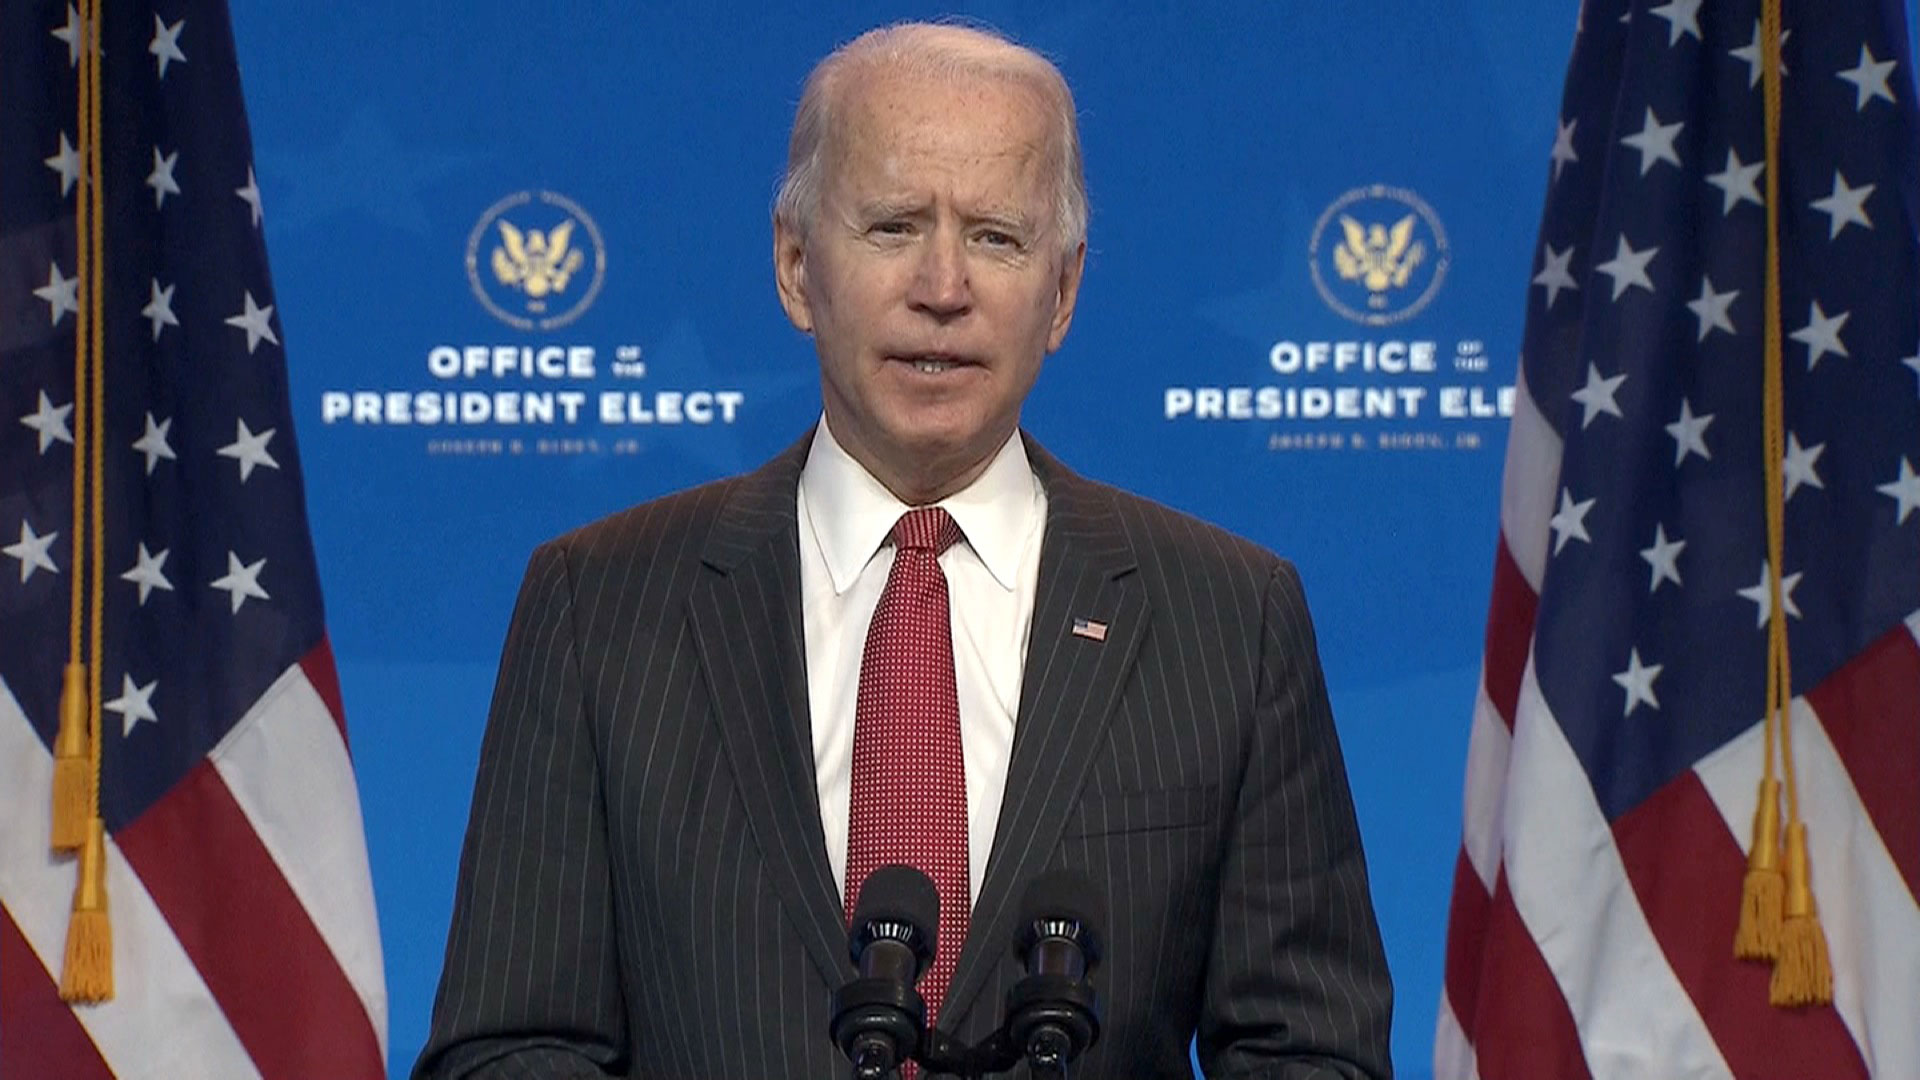 President-elect Joe Biden speaks during a press conference on Thursday, November 19 in Wilmington, Delaware.